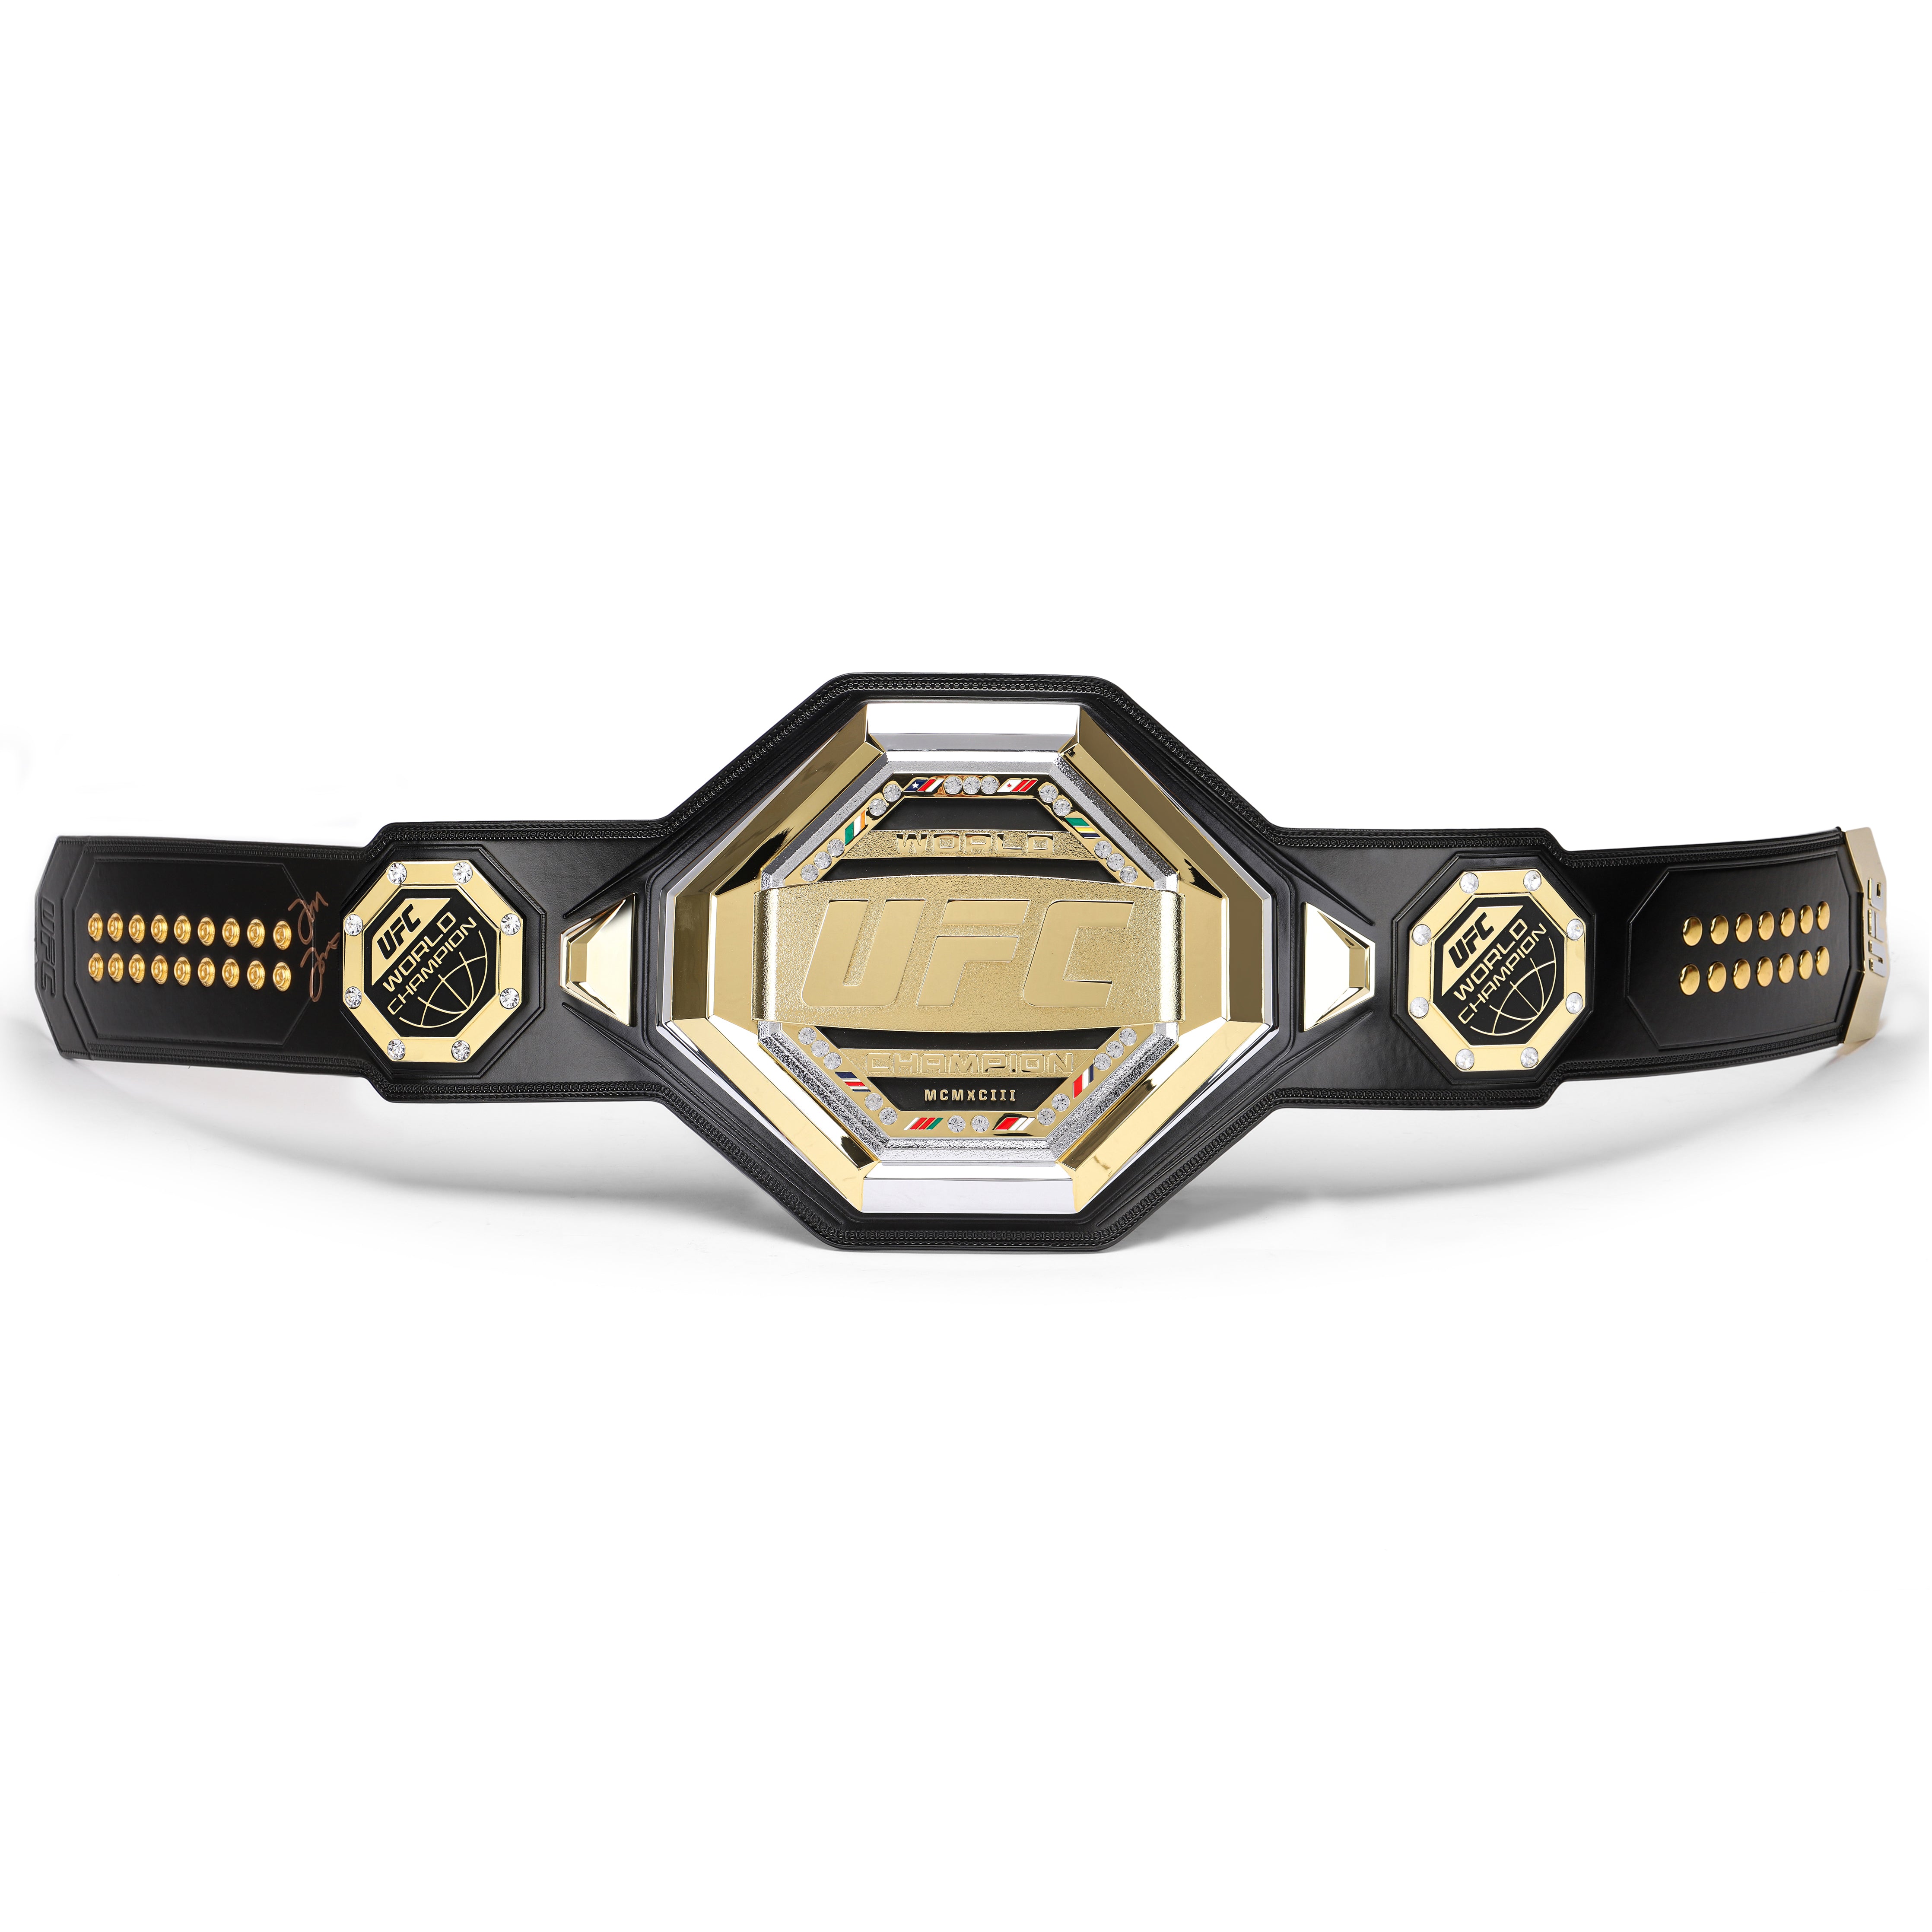 UFC Championship Replica Belts, Signed UFC Title Belts